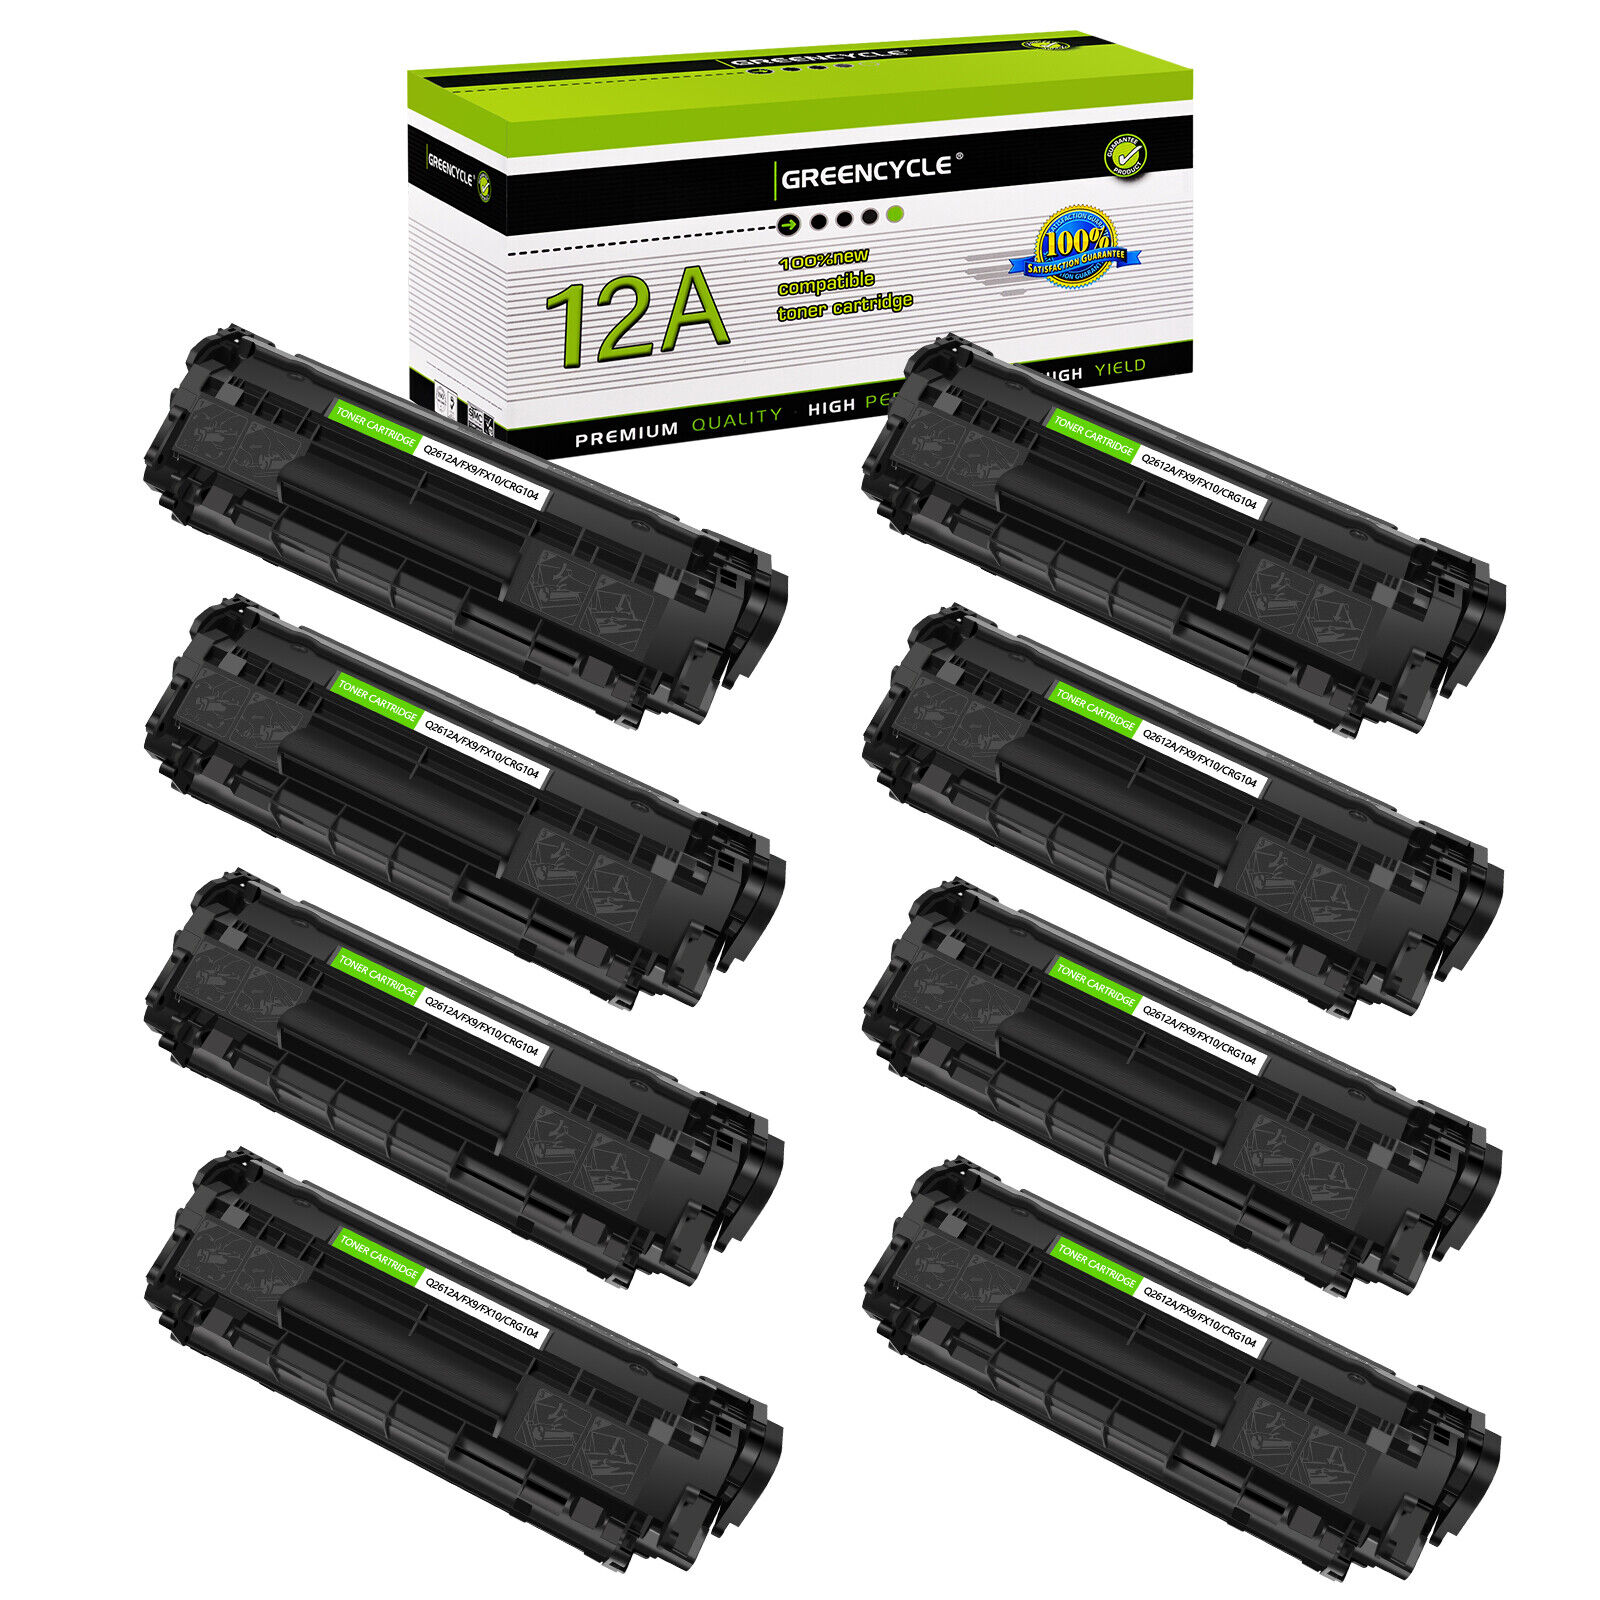 8PK New Q2612A 12A Toner Cartridge For HP Laserjet 1018 1012 1010 1020 1022 3015